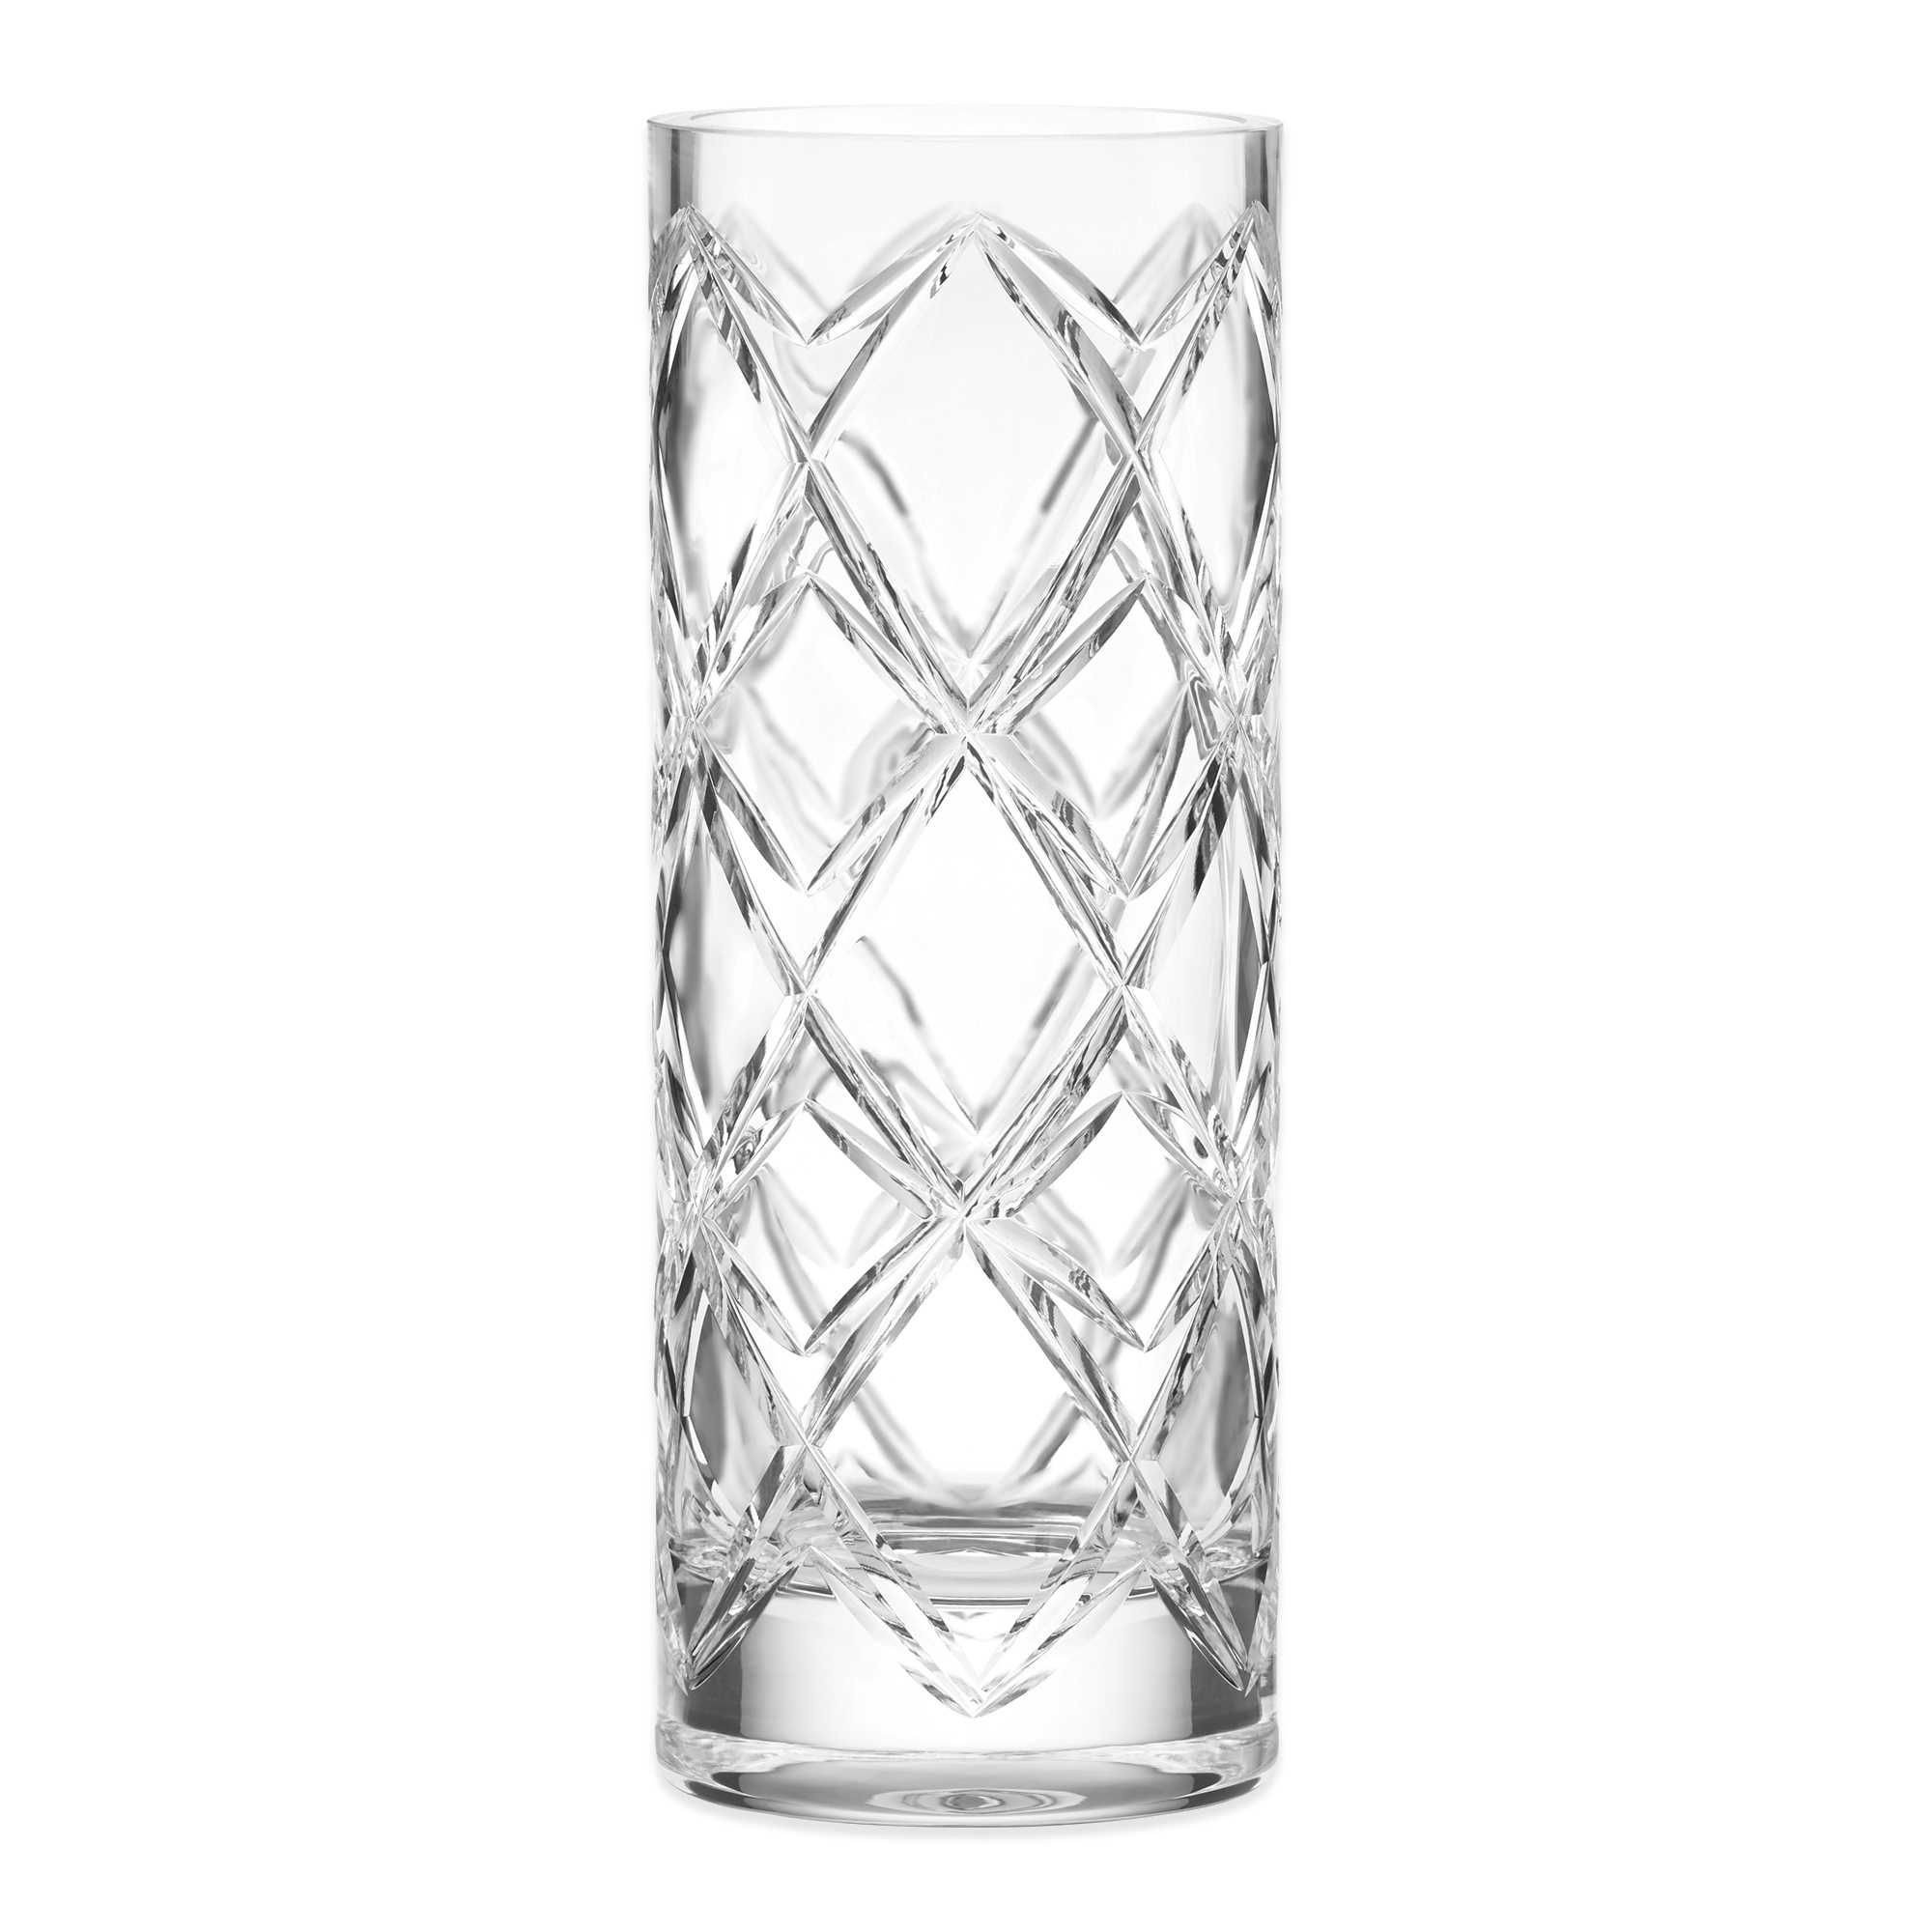 29 Trendy Kate Spade Crystal Vase 2024 free download kate spade crystal vase of the 10 best wedding gifts to buy in 2018 with katespadenewyorkcalhouncourt10 inchvase 5a9494976edd6500372b5a93